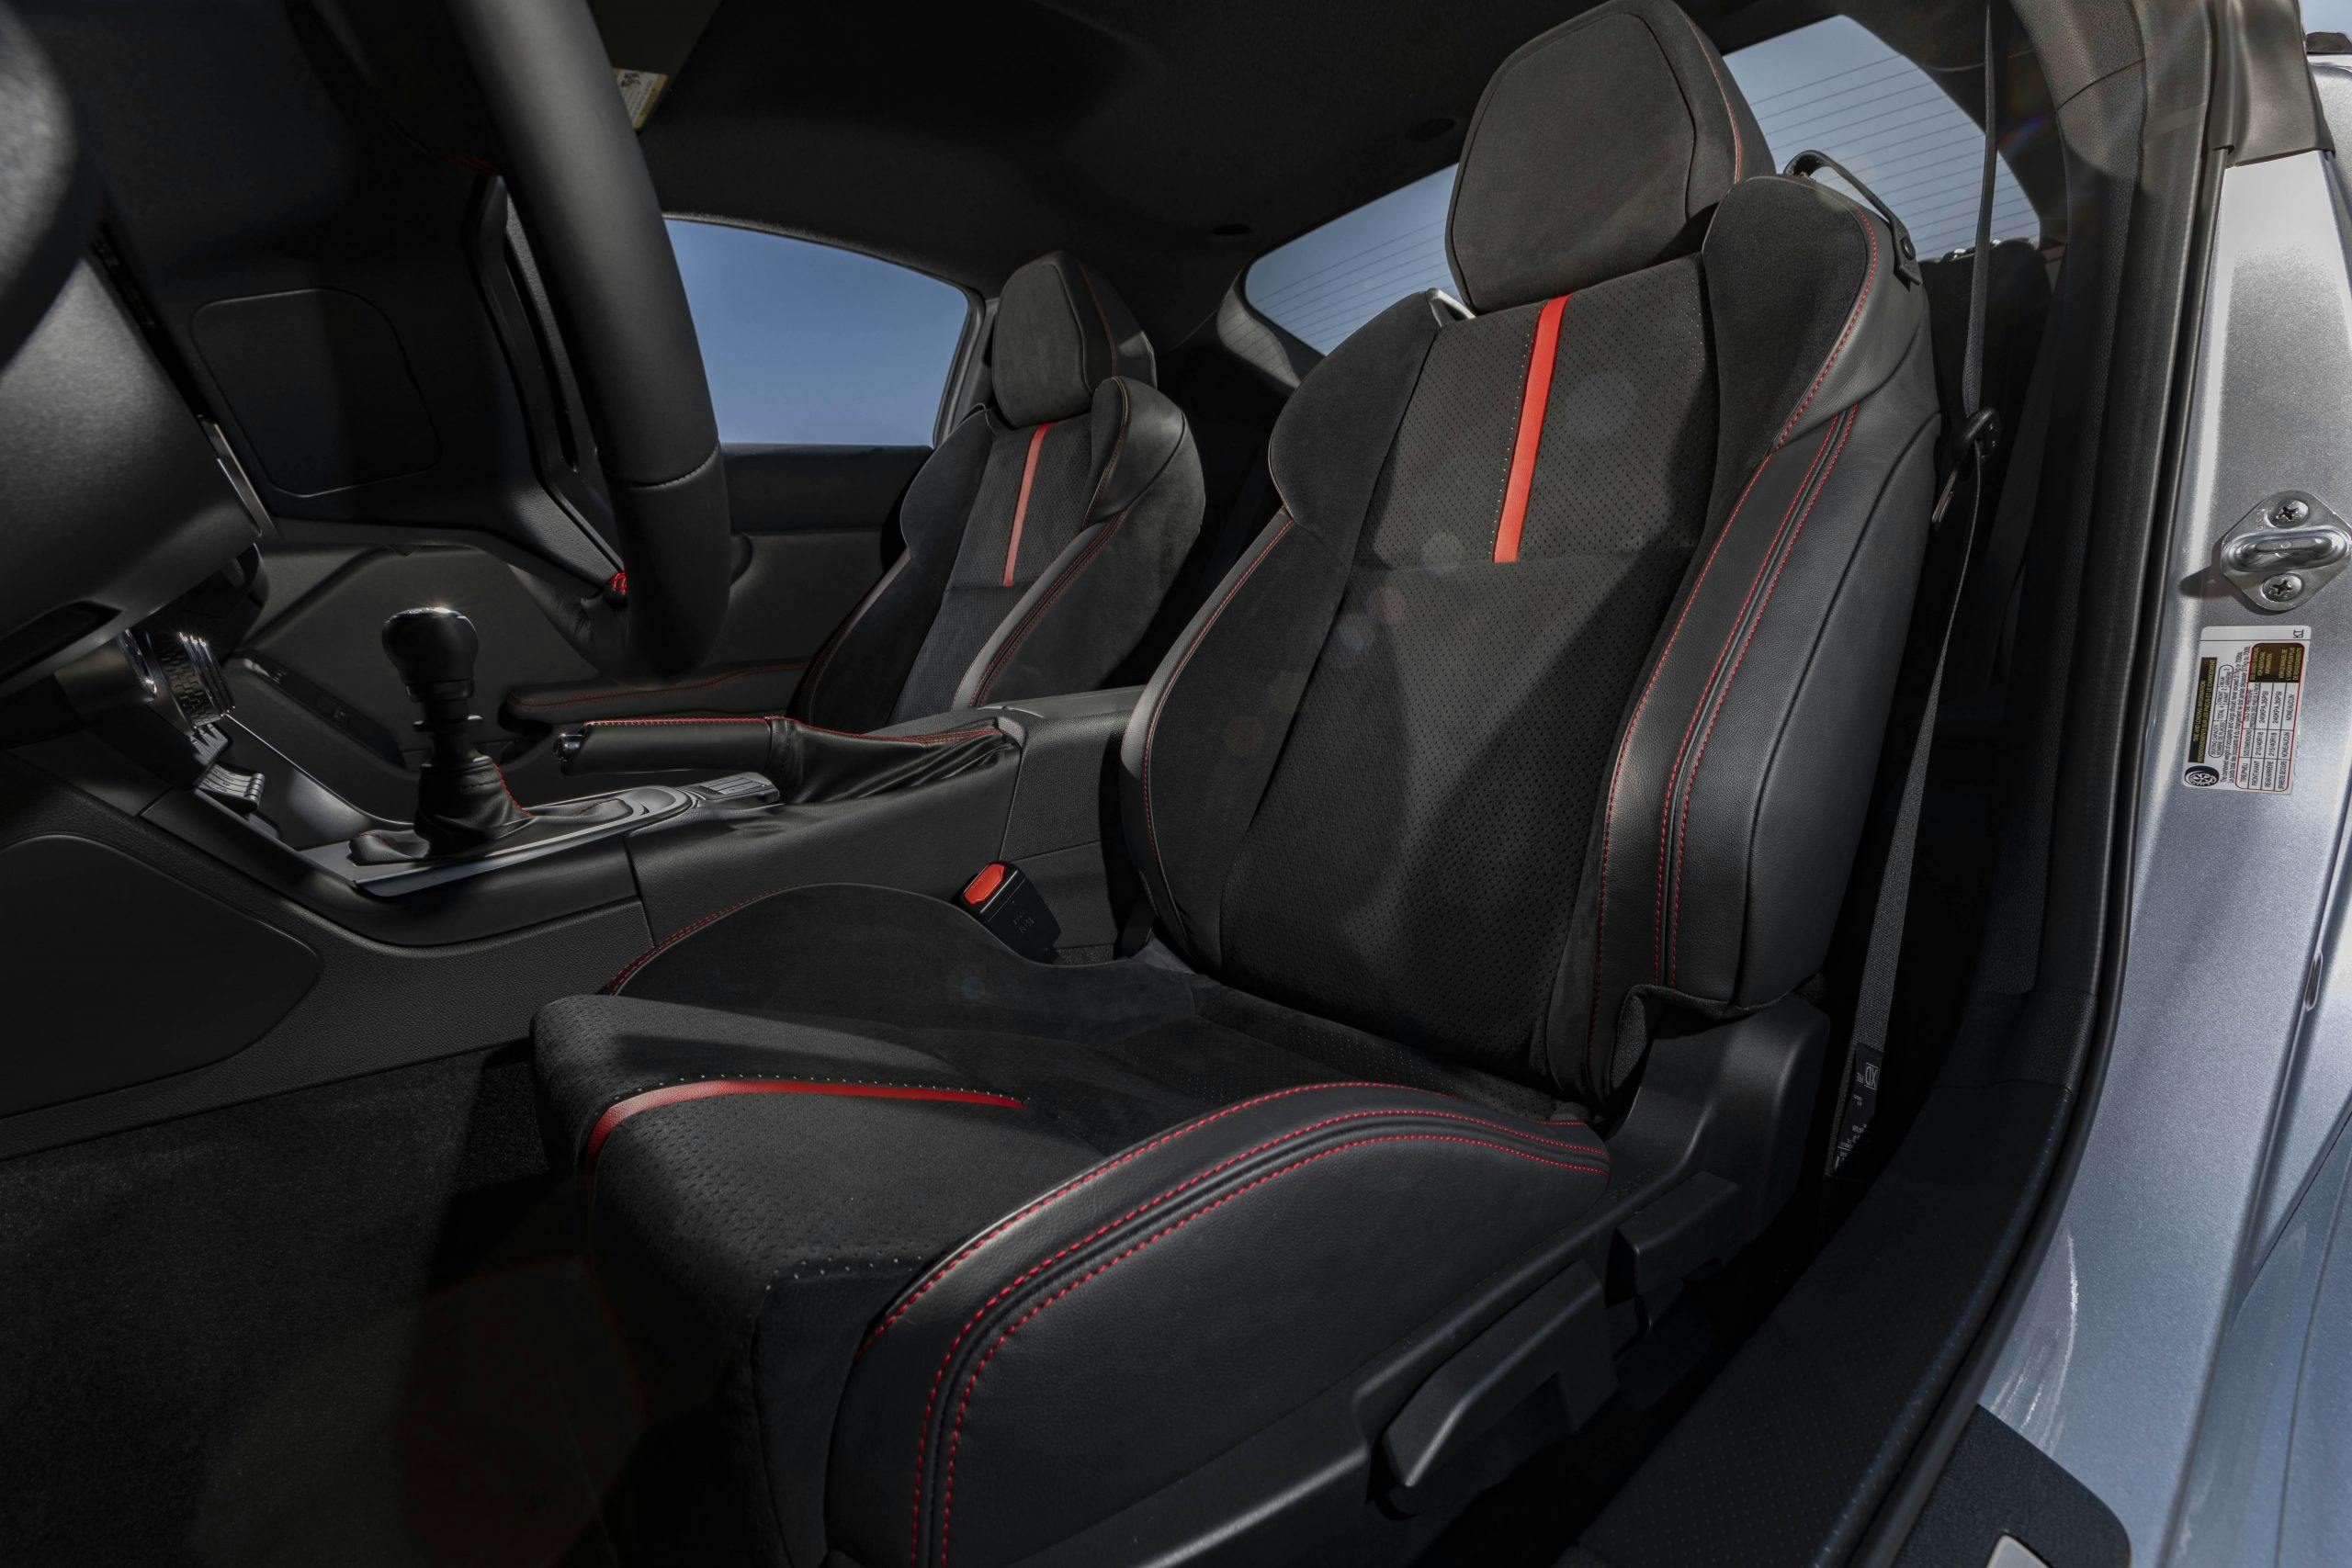 New 2022 Subaru BRZ interior front seats